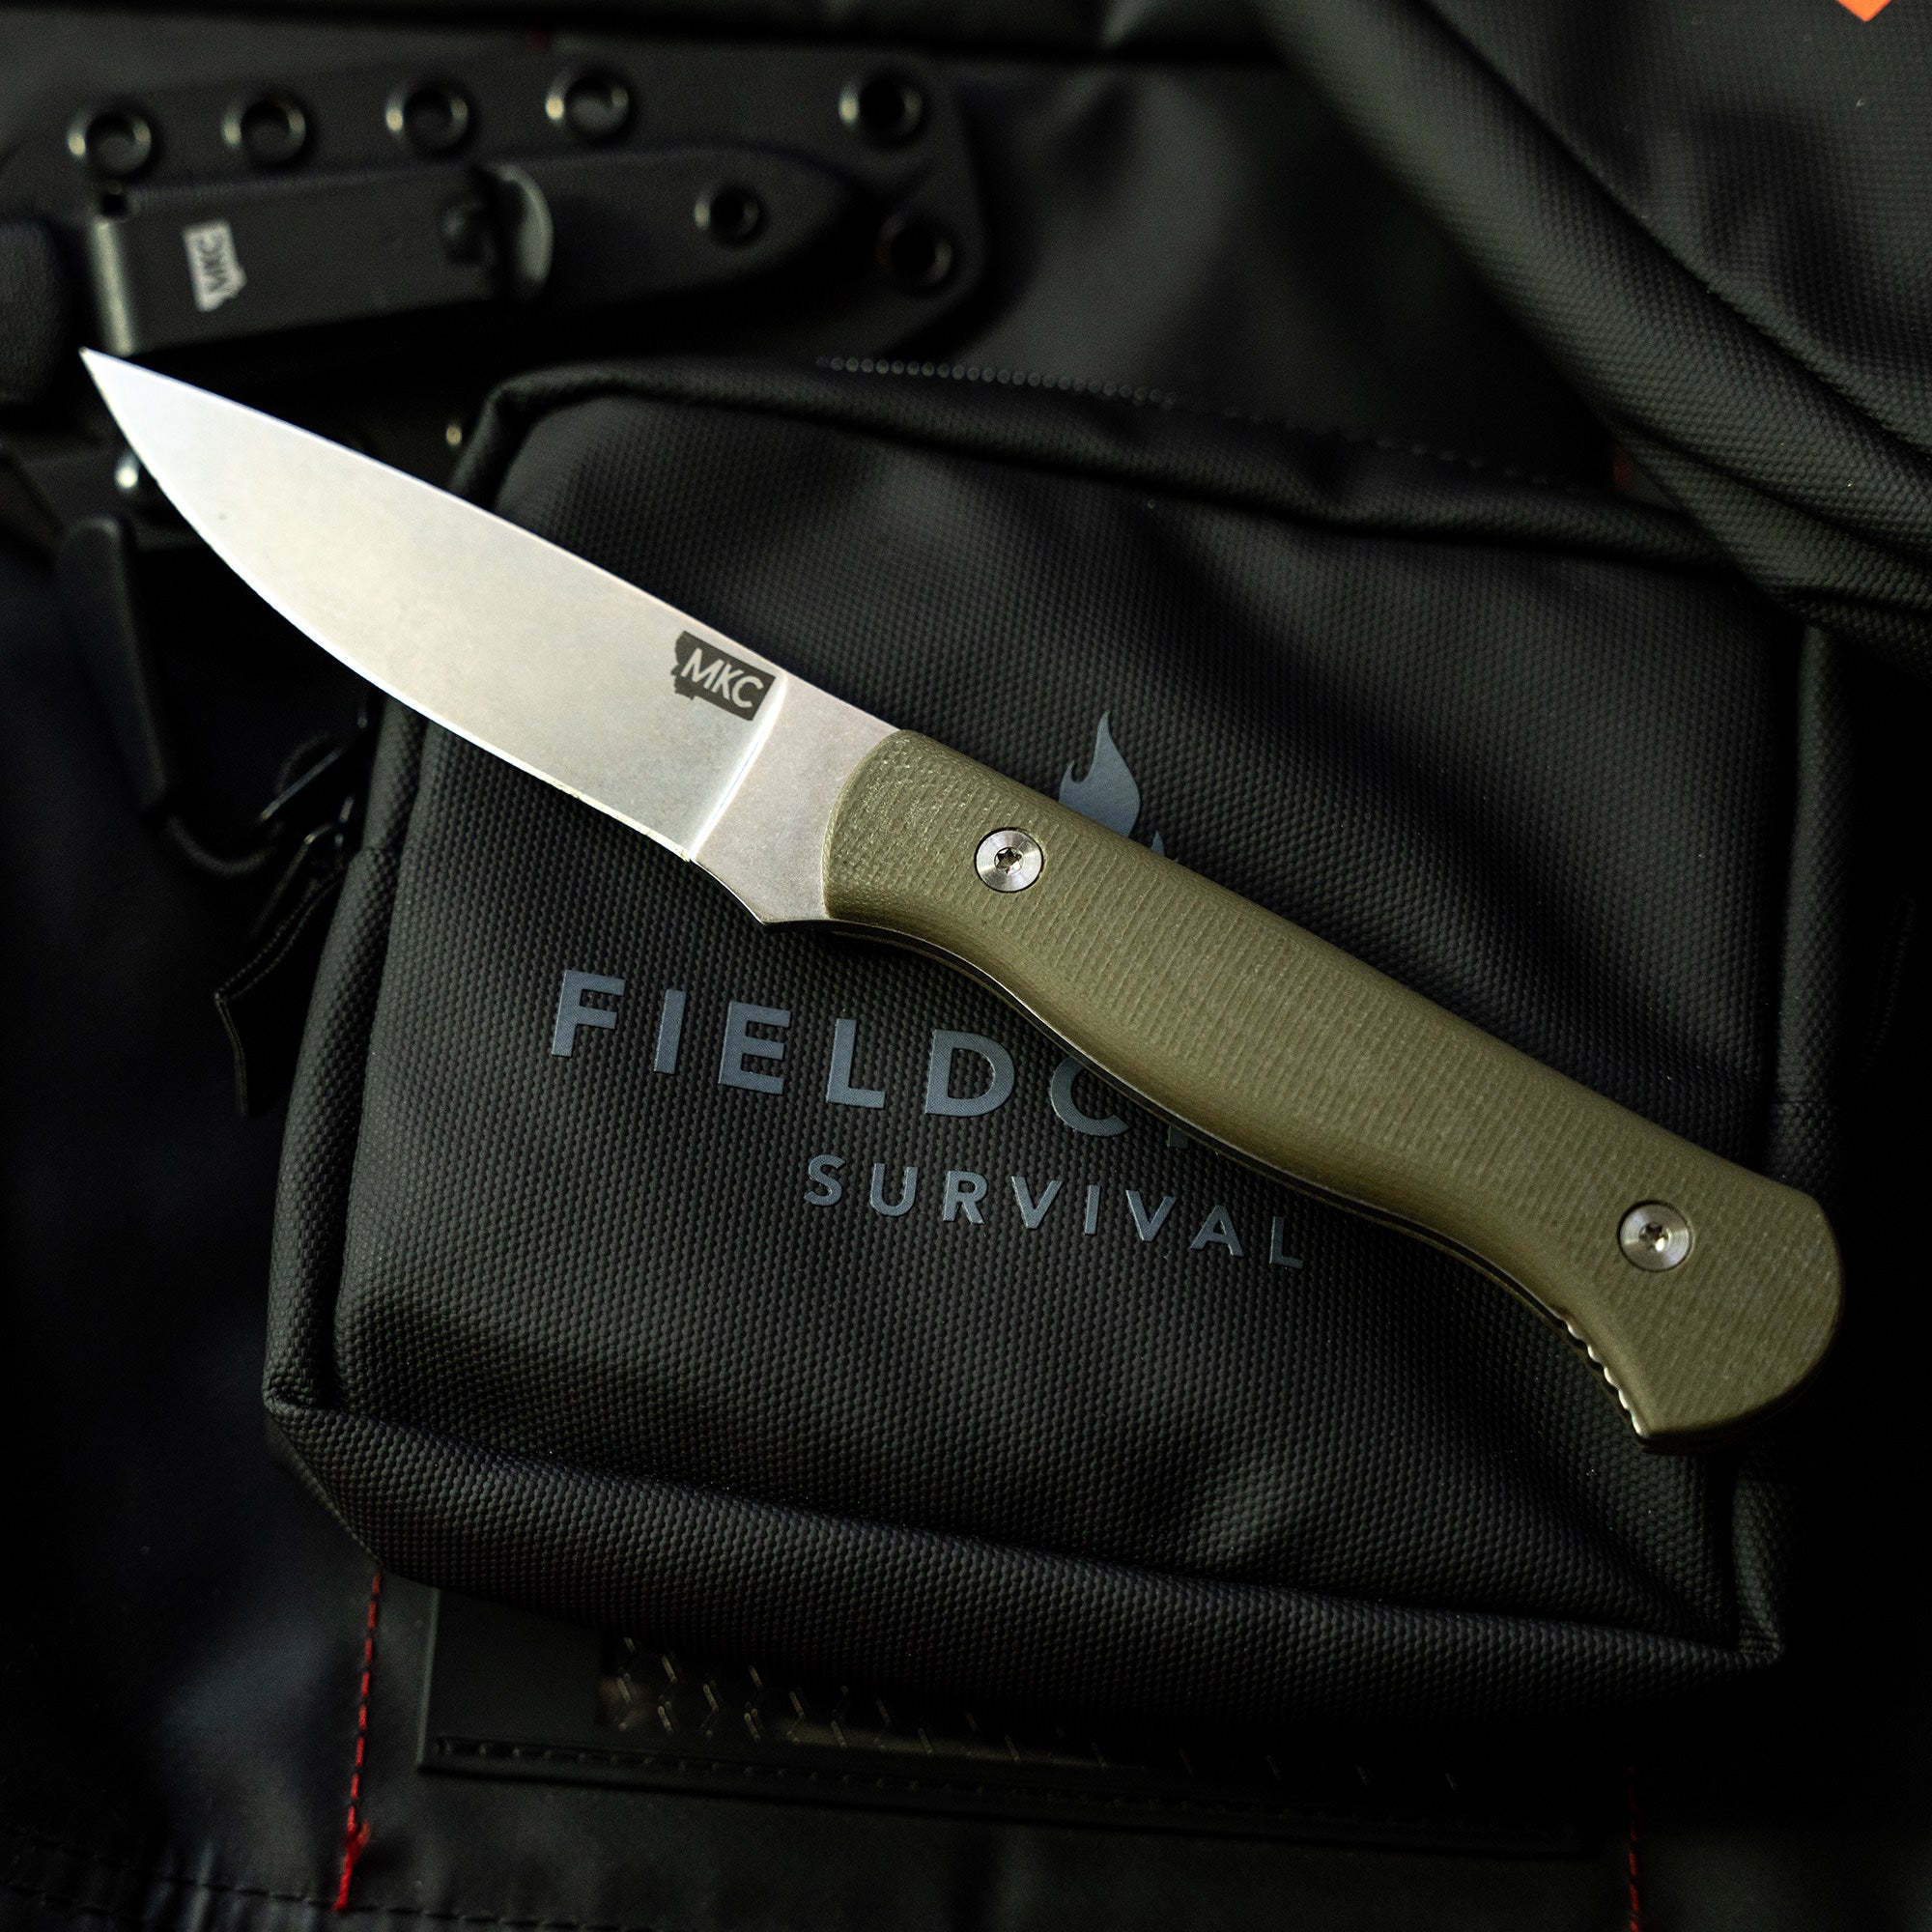 FIELDCRAFT SURVIVAL KNIFE - OLIVE